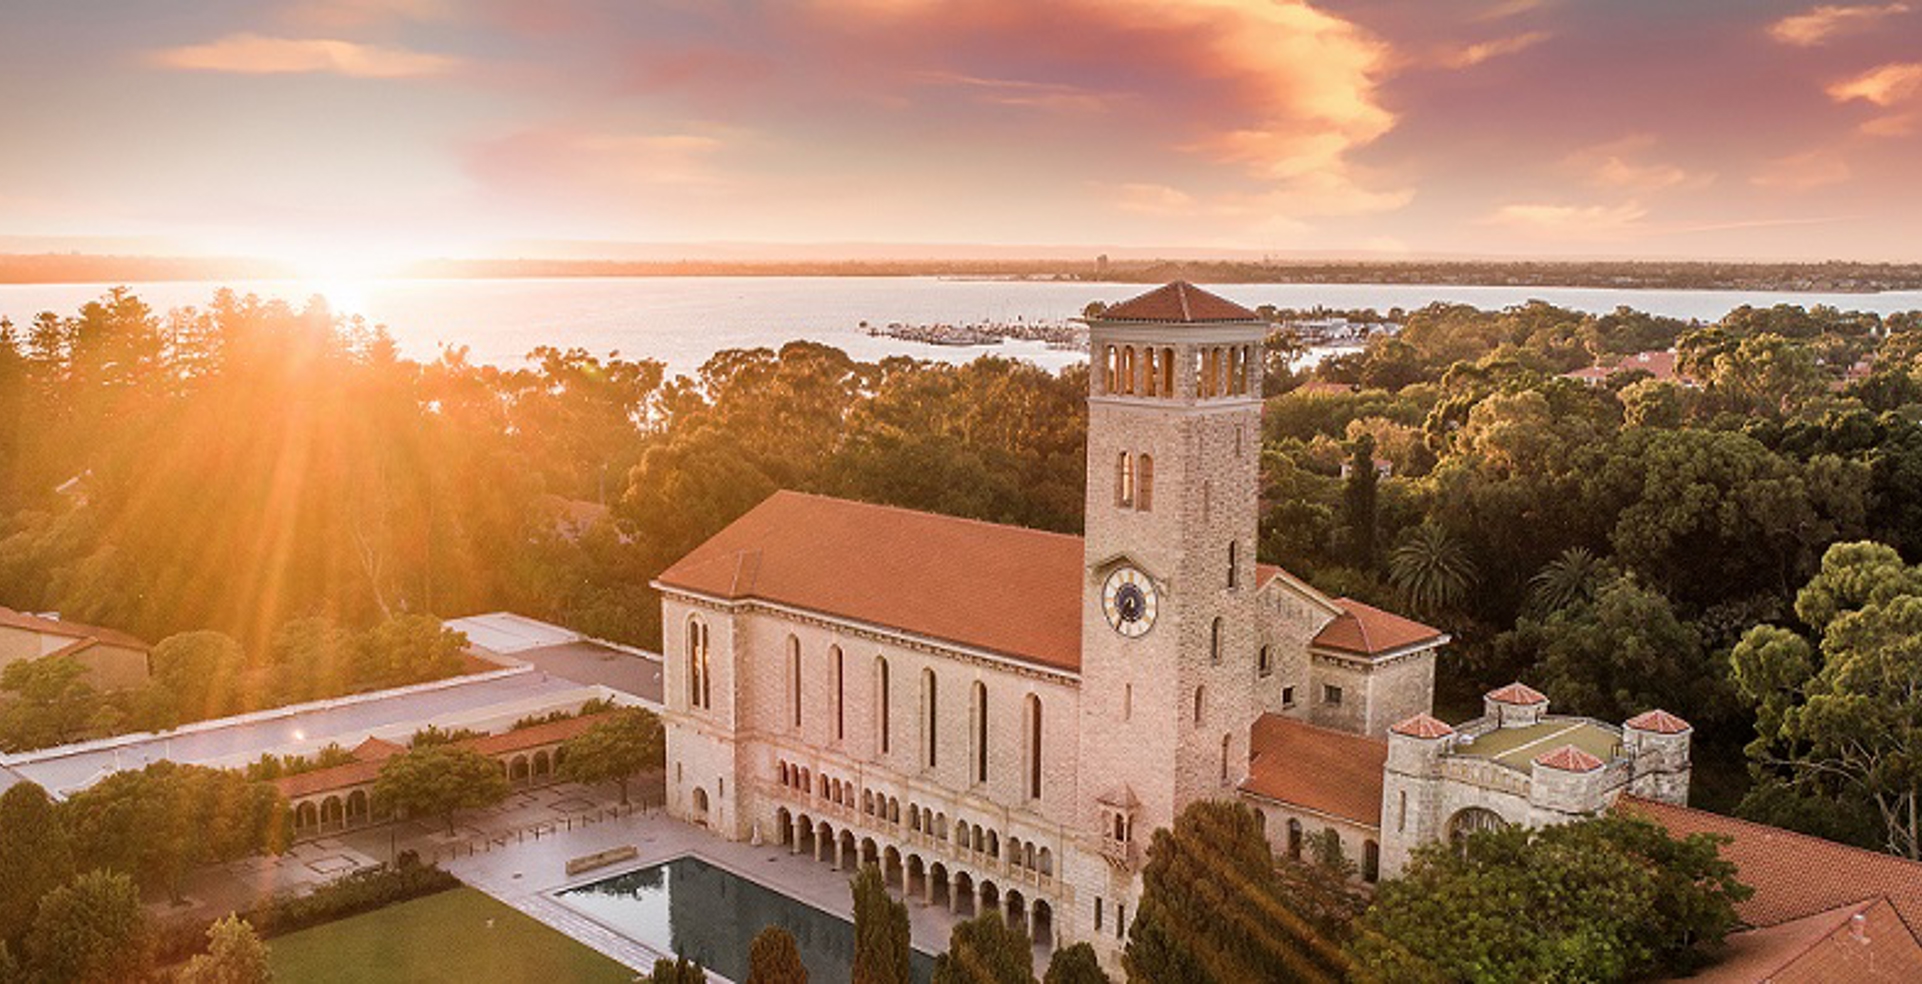 2022 University Of Western Australia FLRF